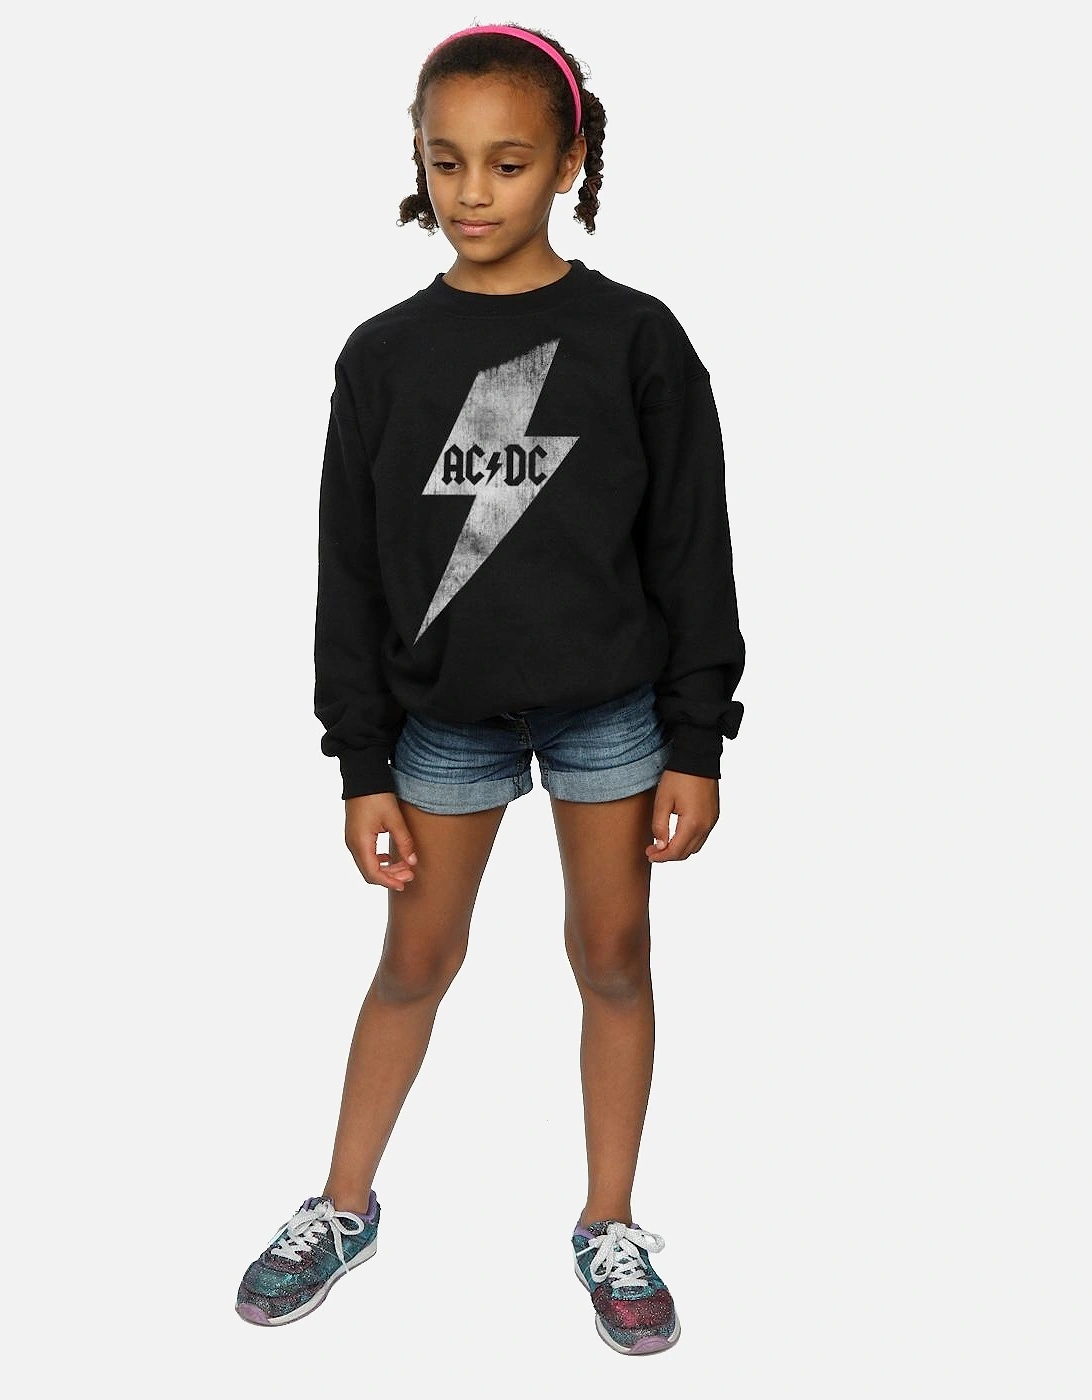 Girls Lightning Bolt Sweatshirt